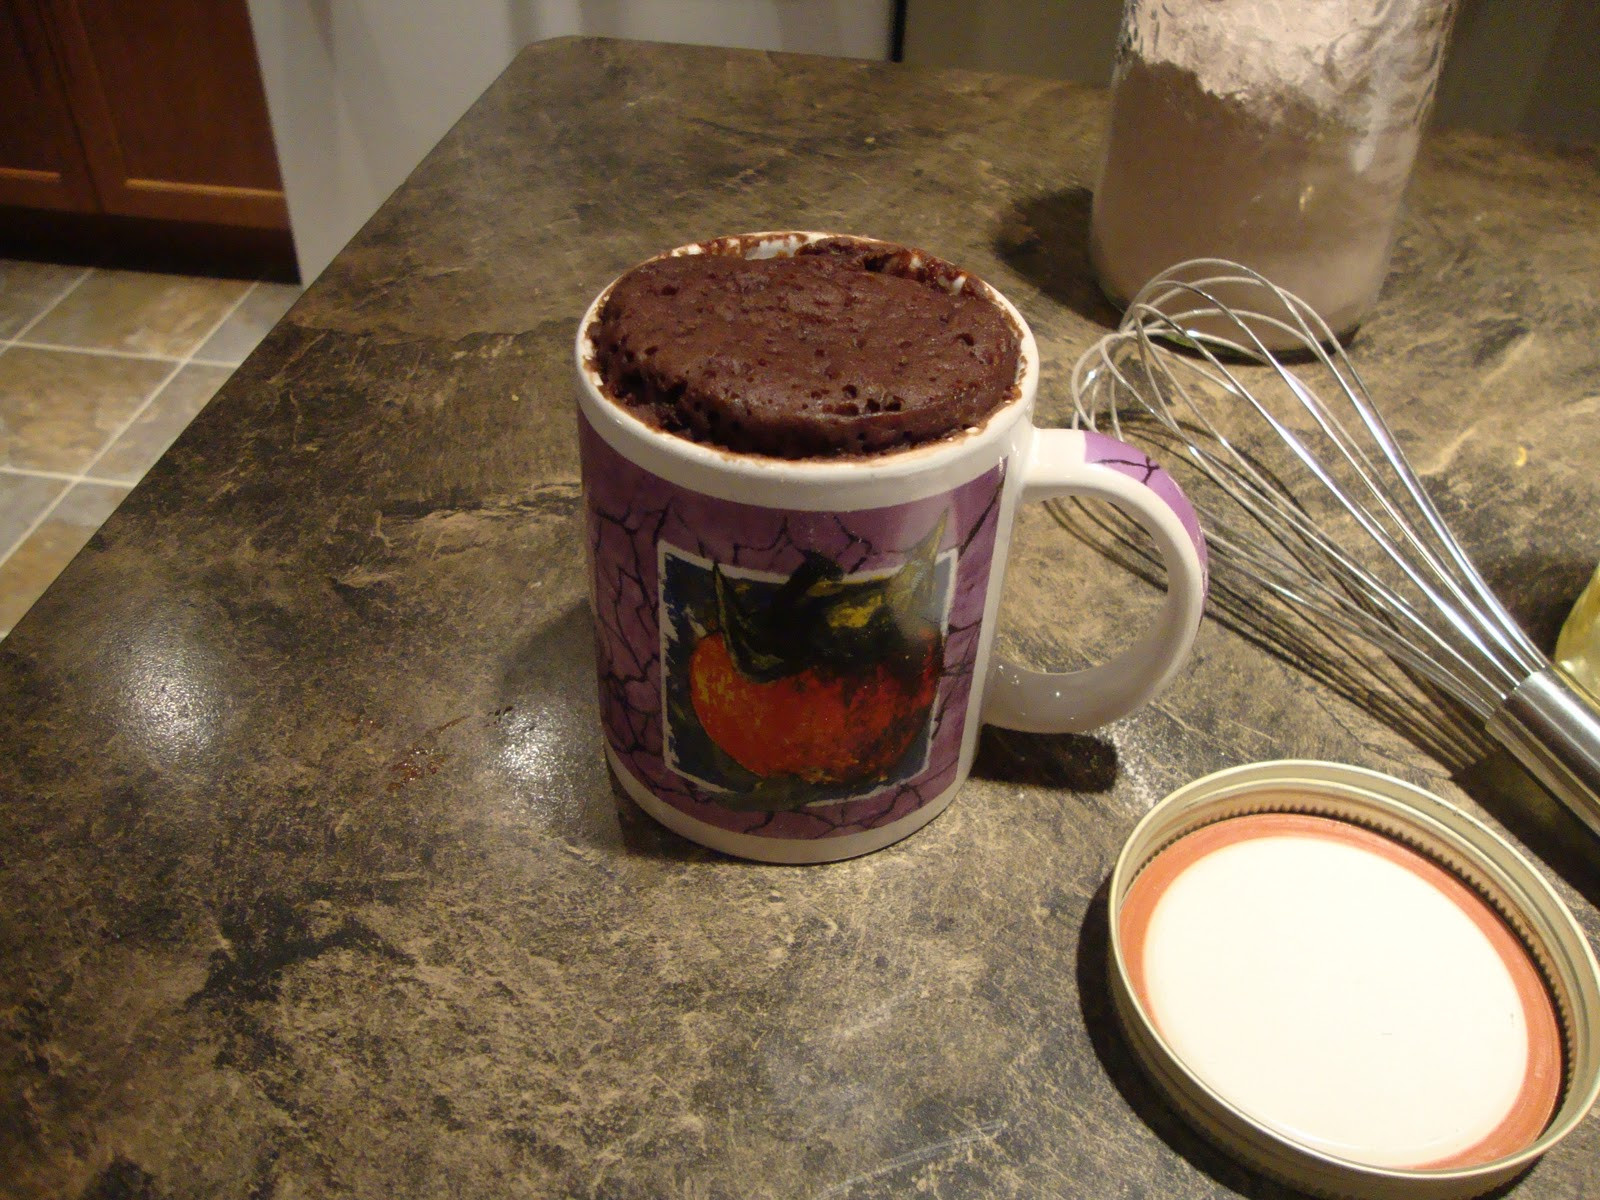 Microwave Cupcakes In A Mug
 Joyful Things Microwave Chocolate "Cup" Cakes